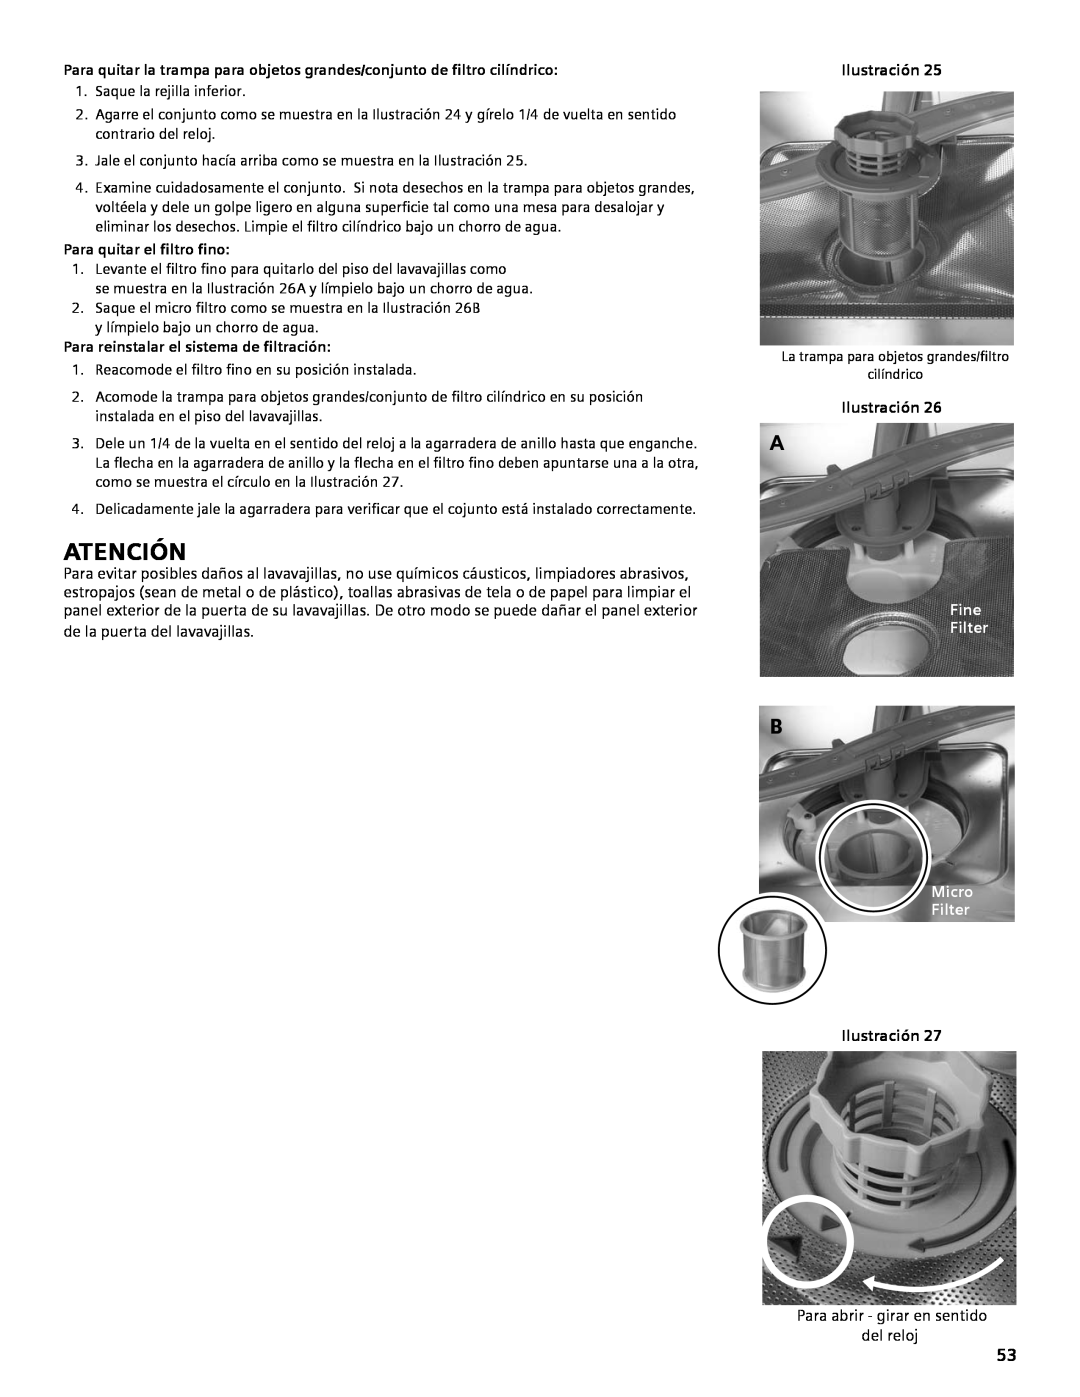 Bosch Appliances SGV45E03UC manual Atención, Ilustración, Fine Filter, Micro Filter, Para quitar el filtro fino 